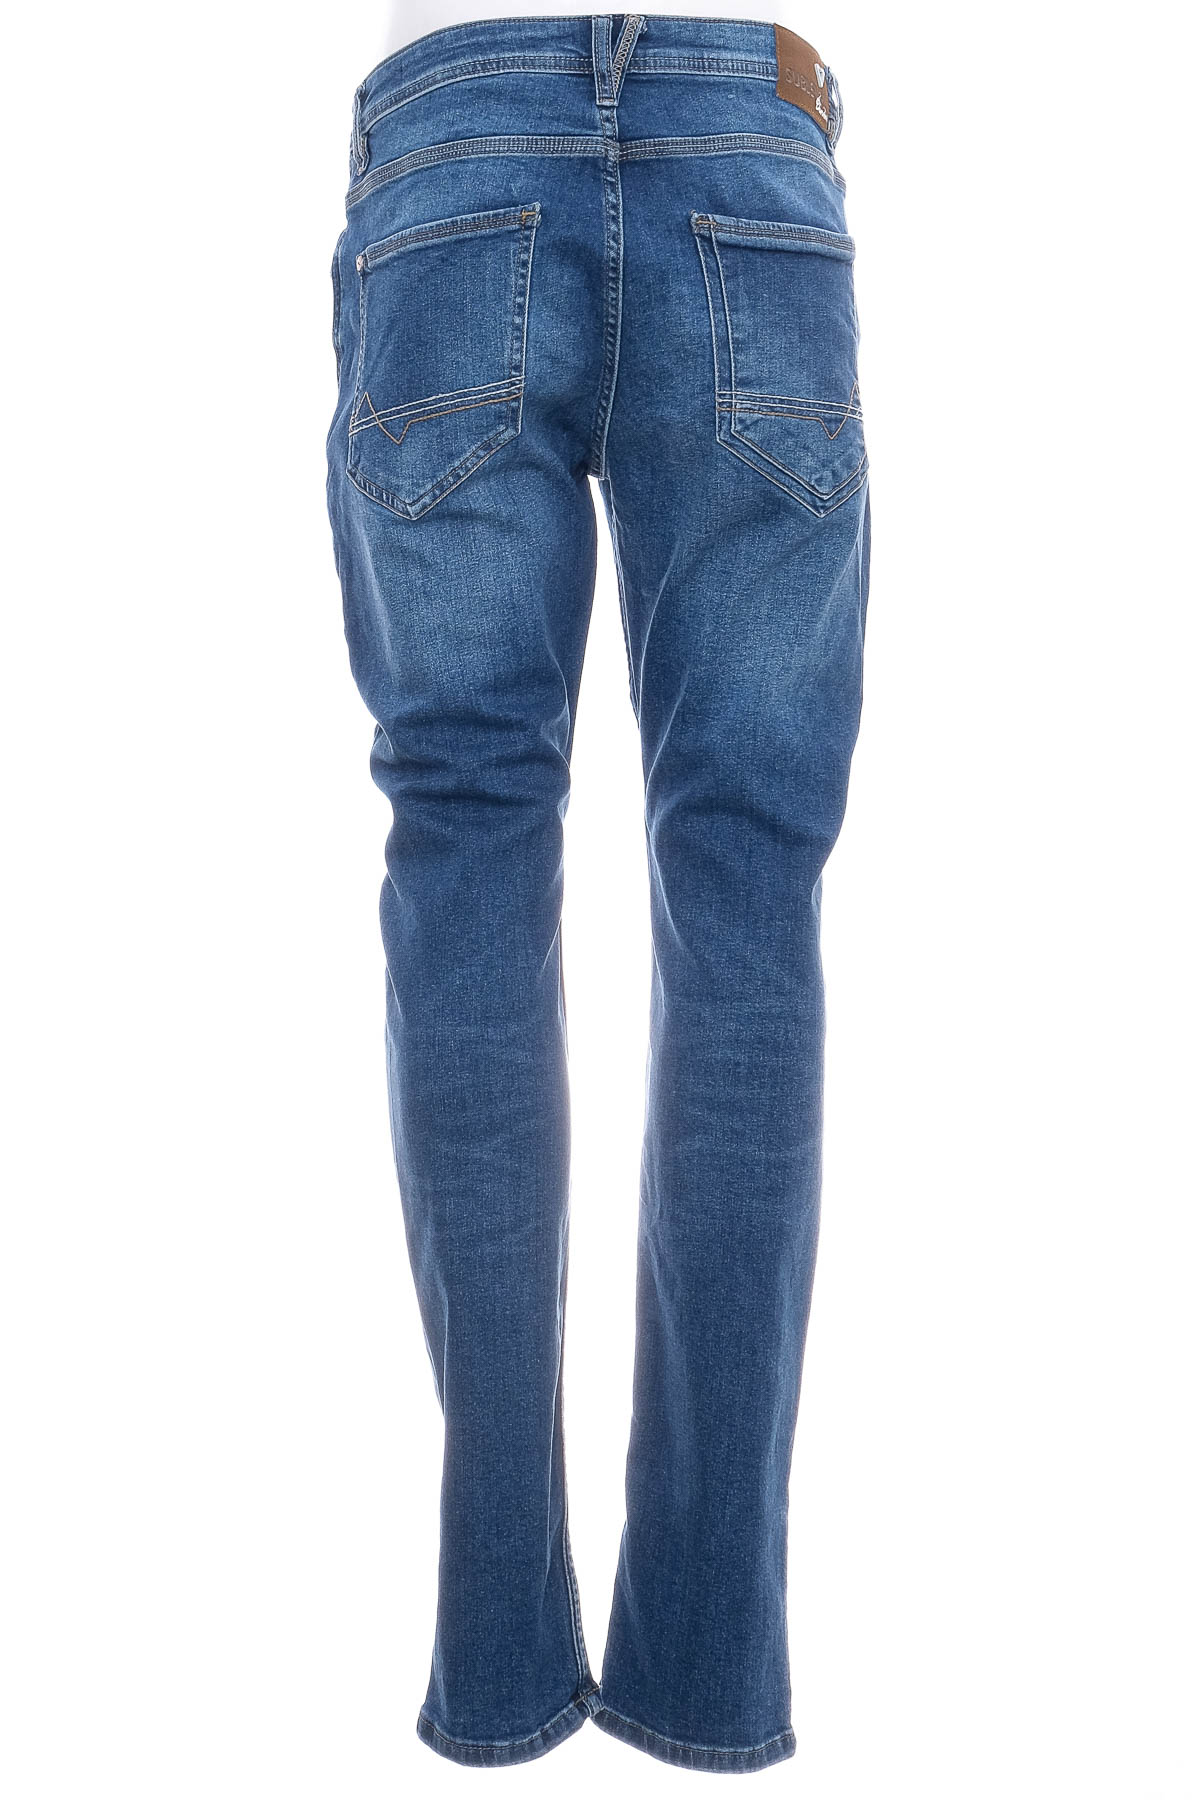 Men's jeans - SUBLEVEL - 1